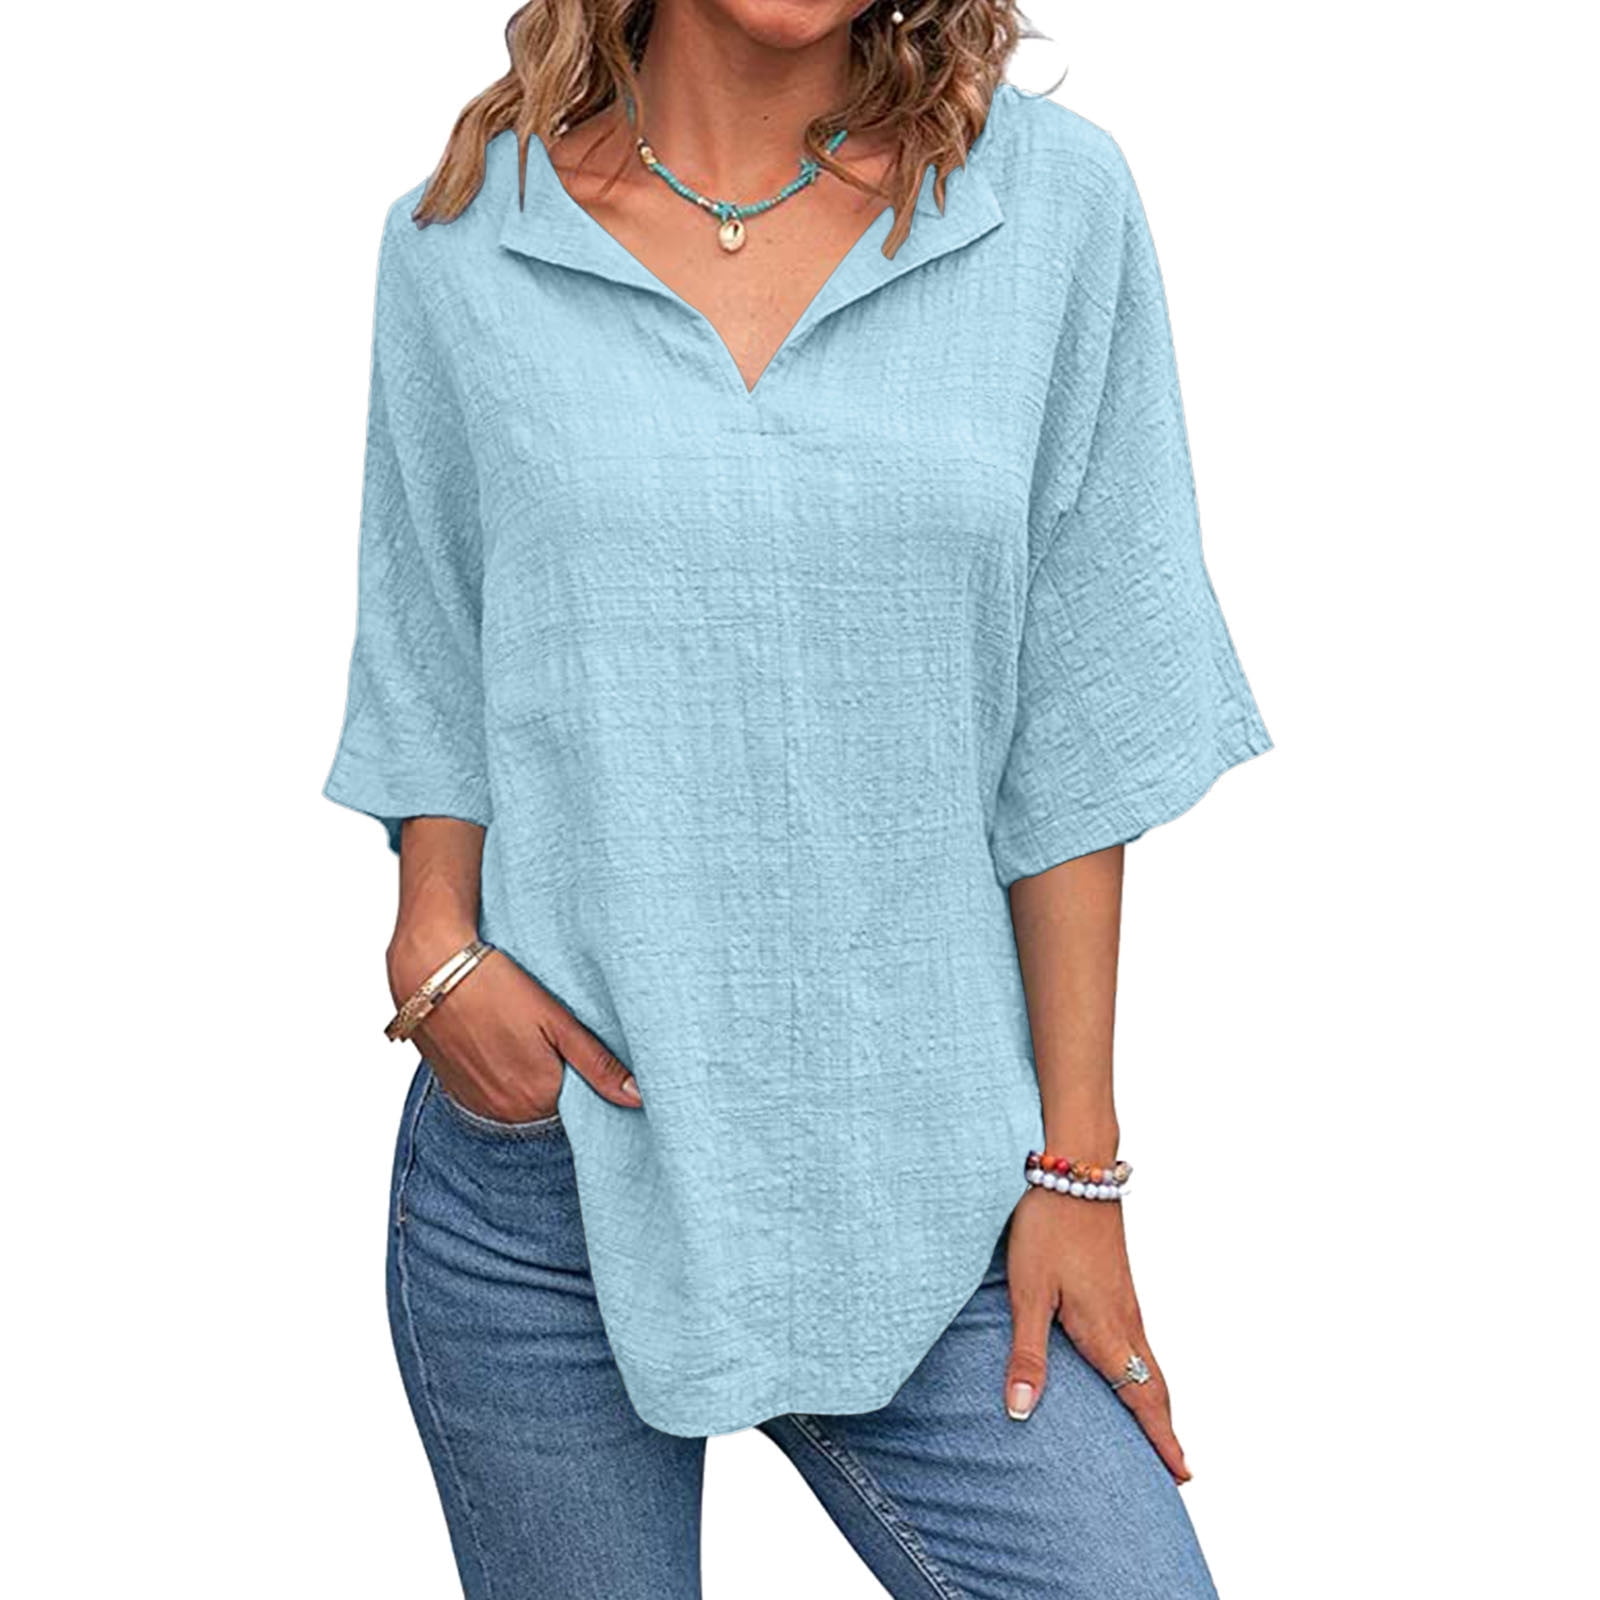 NECHOLOGY Womens T-Shirts Taylor Swift Shirt Womens Plus Size Tops Short  Sleeve Shirts Color Block Tunic Raglan Henley Blouses XL-5XL 